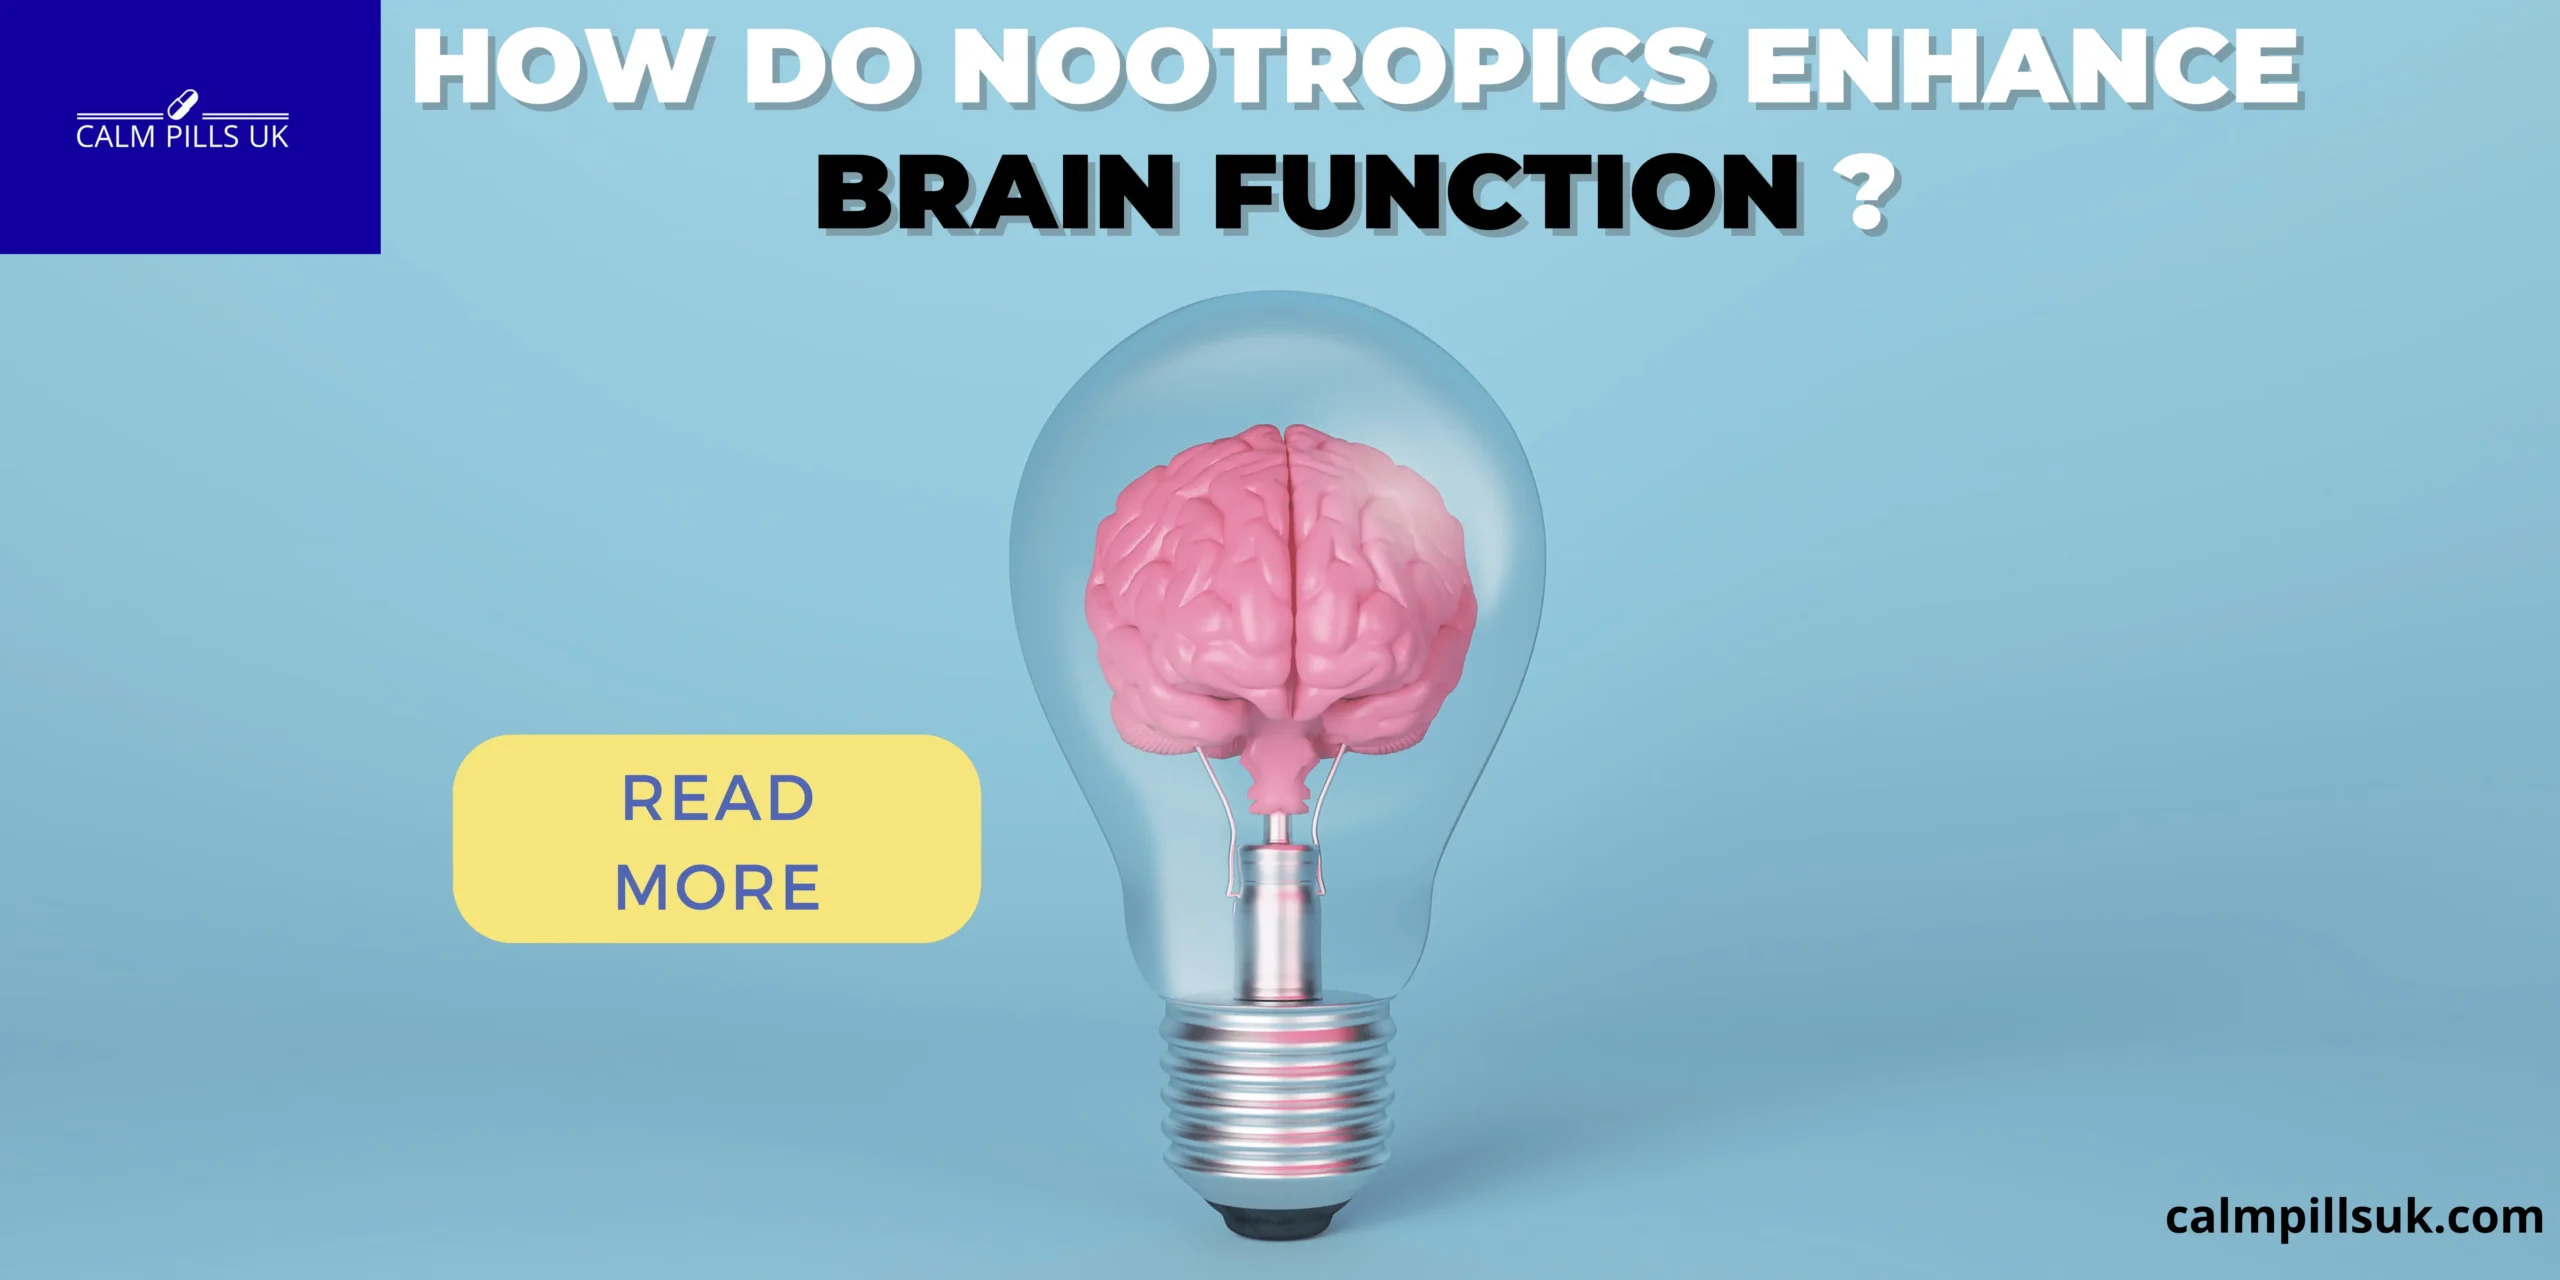 How Do Nootropics Enhance Brain Function?